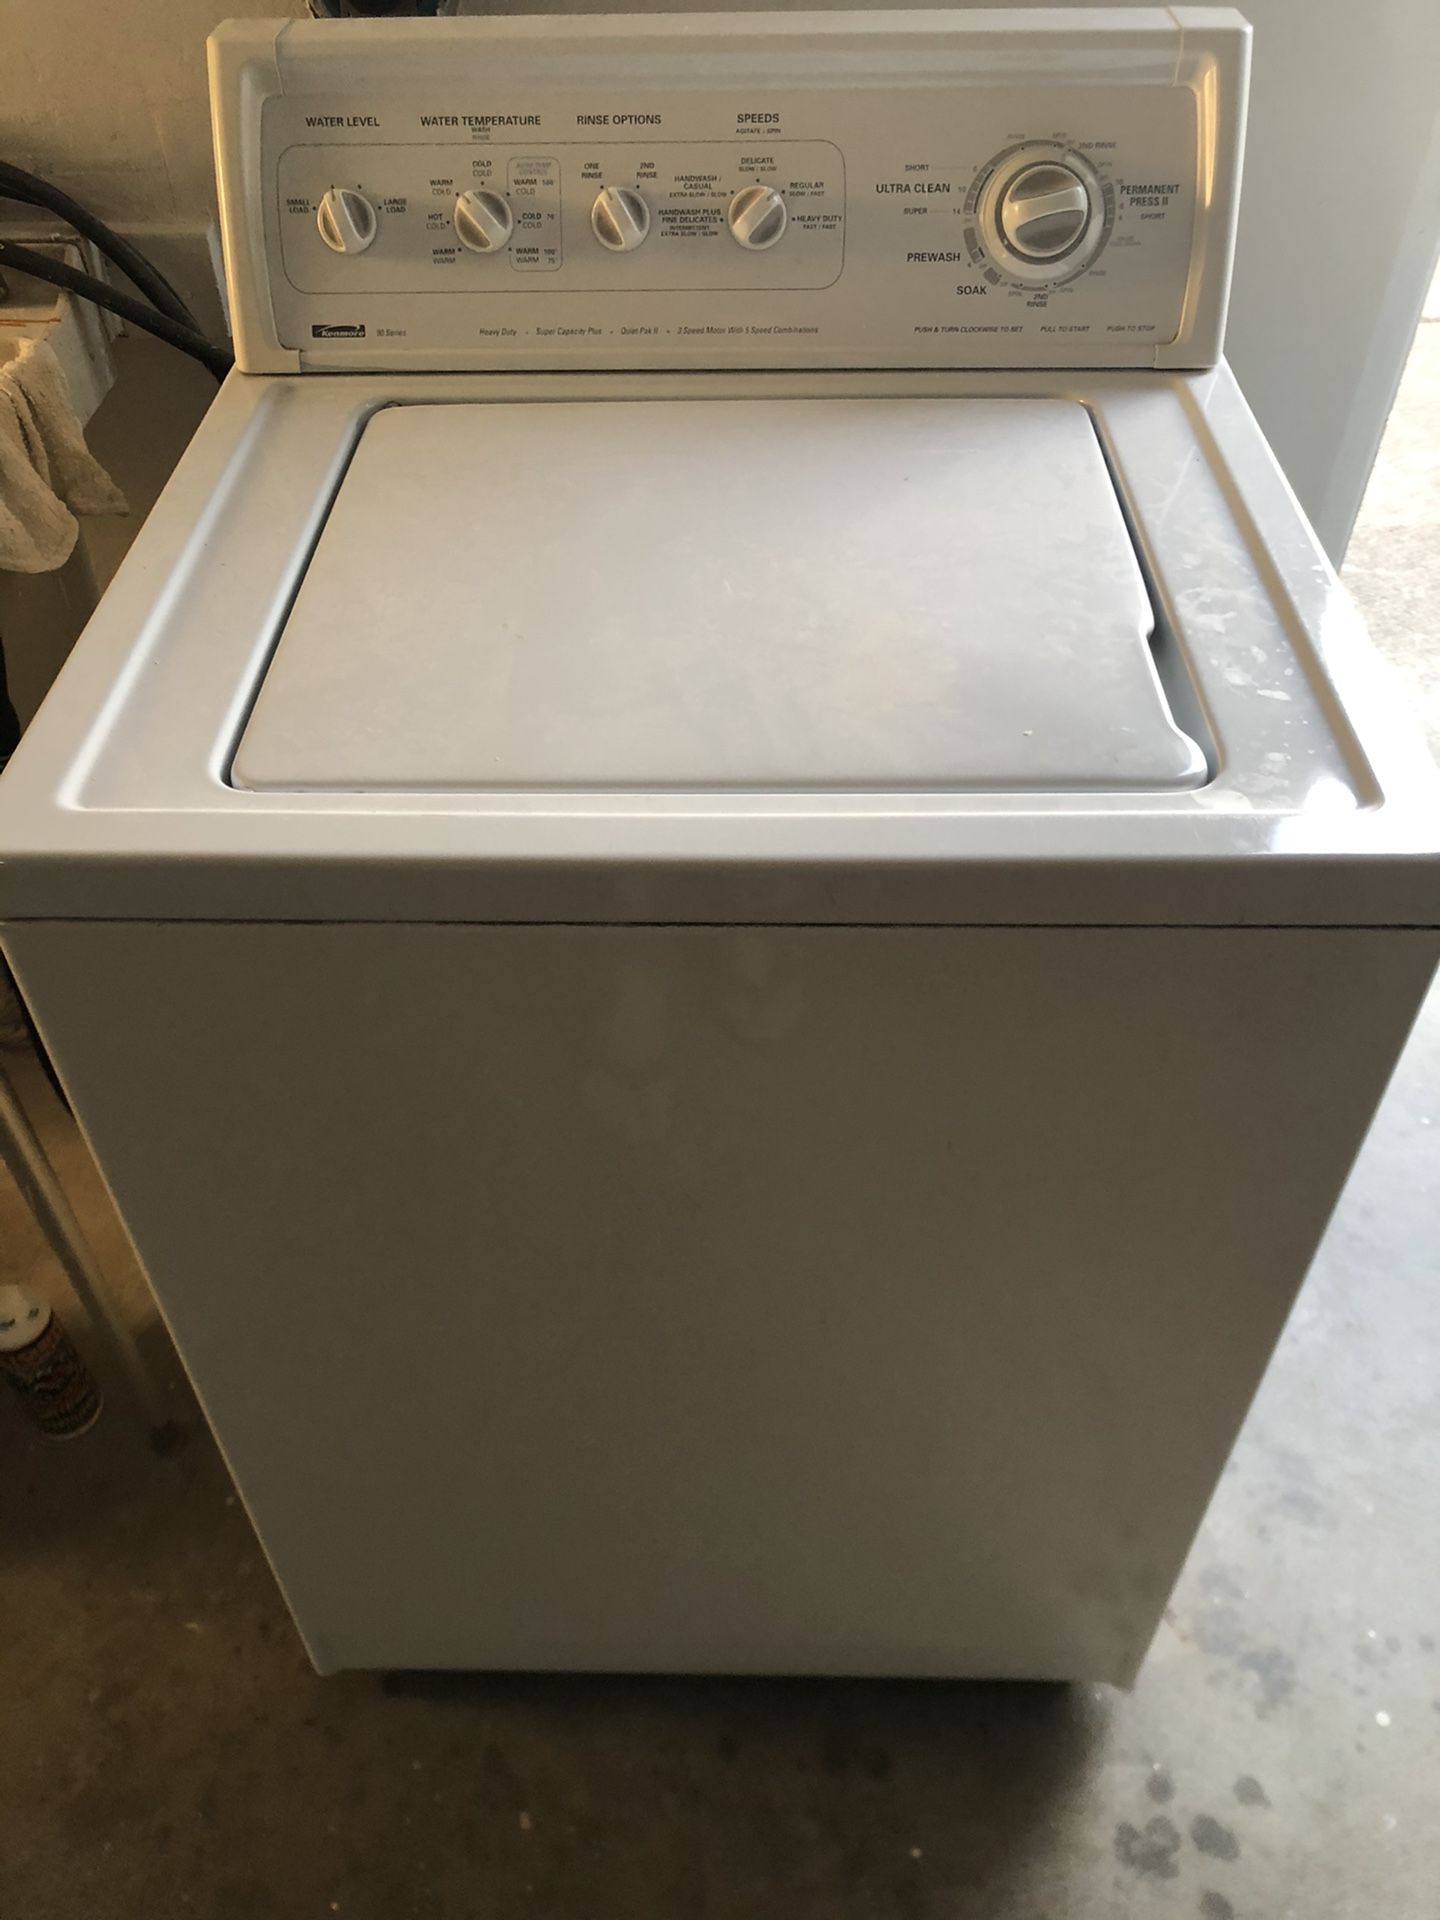 Kenmore elite series washer & dryer